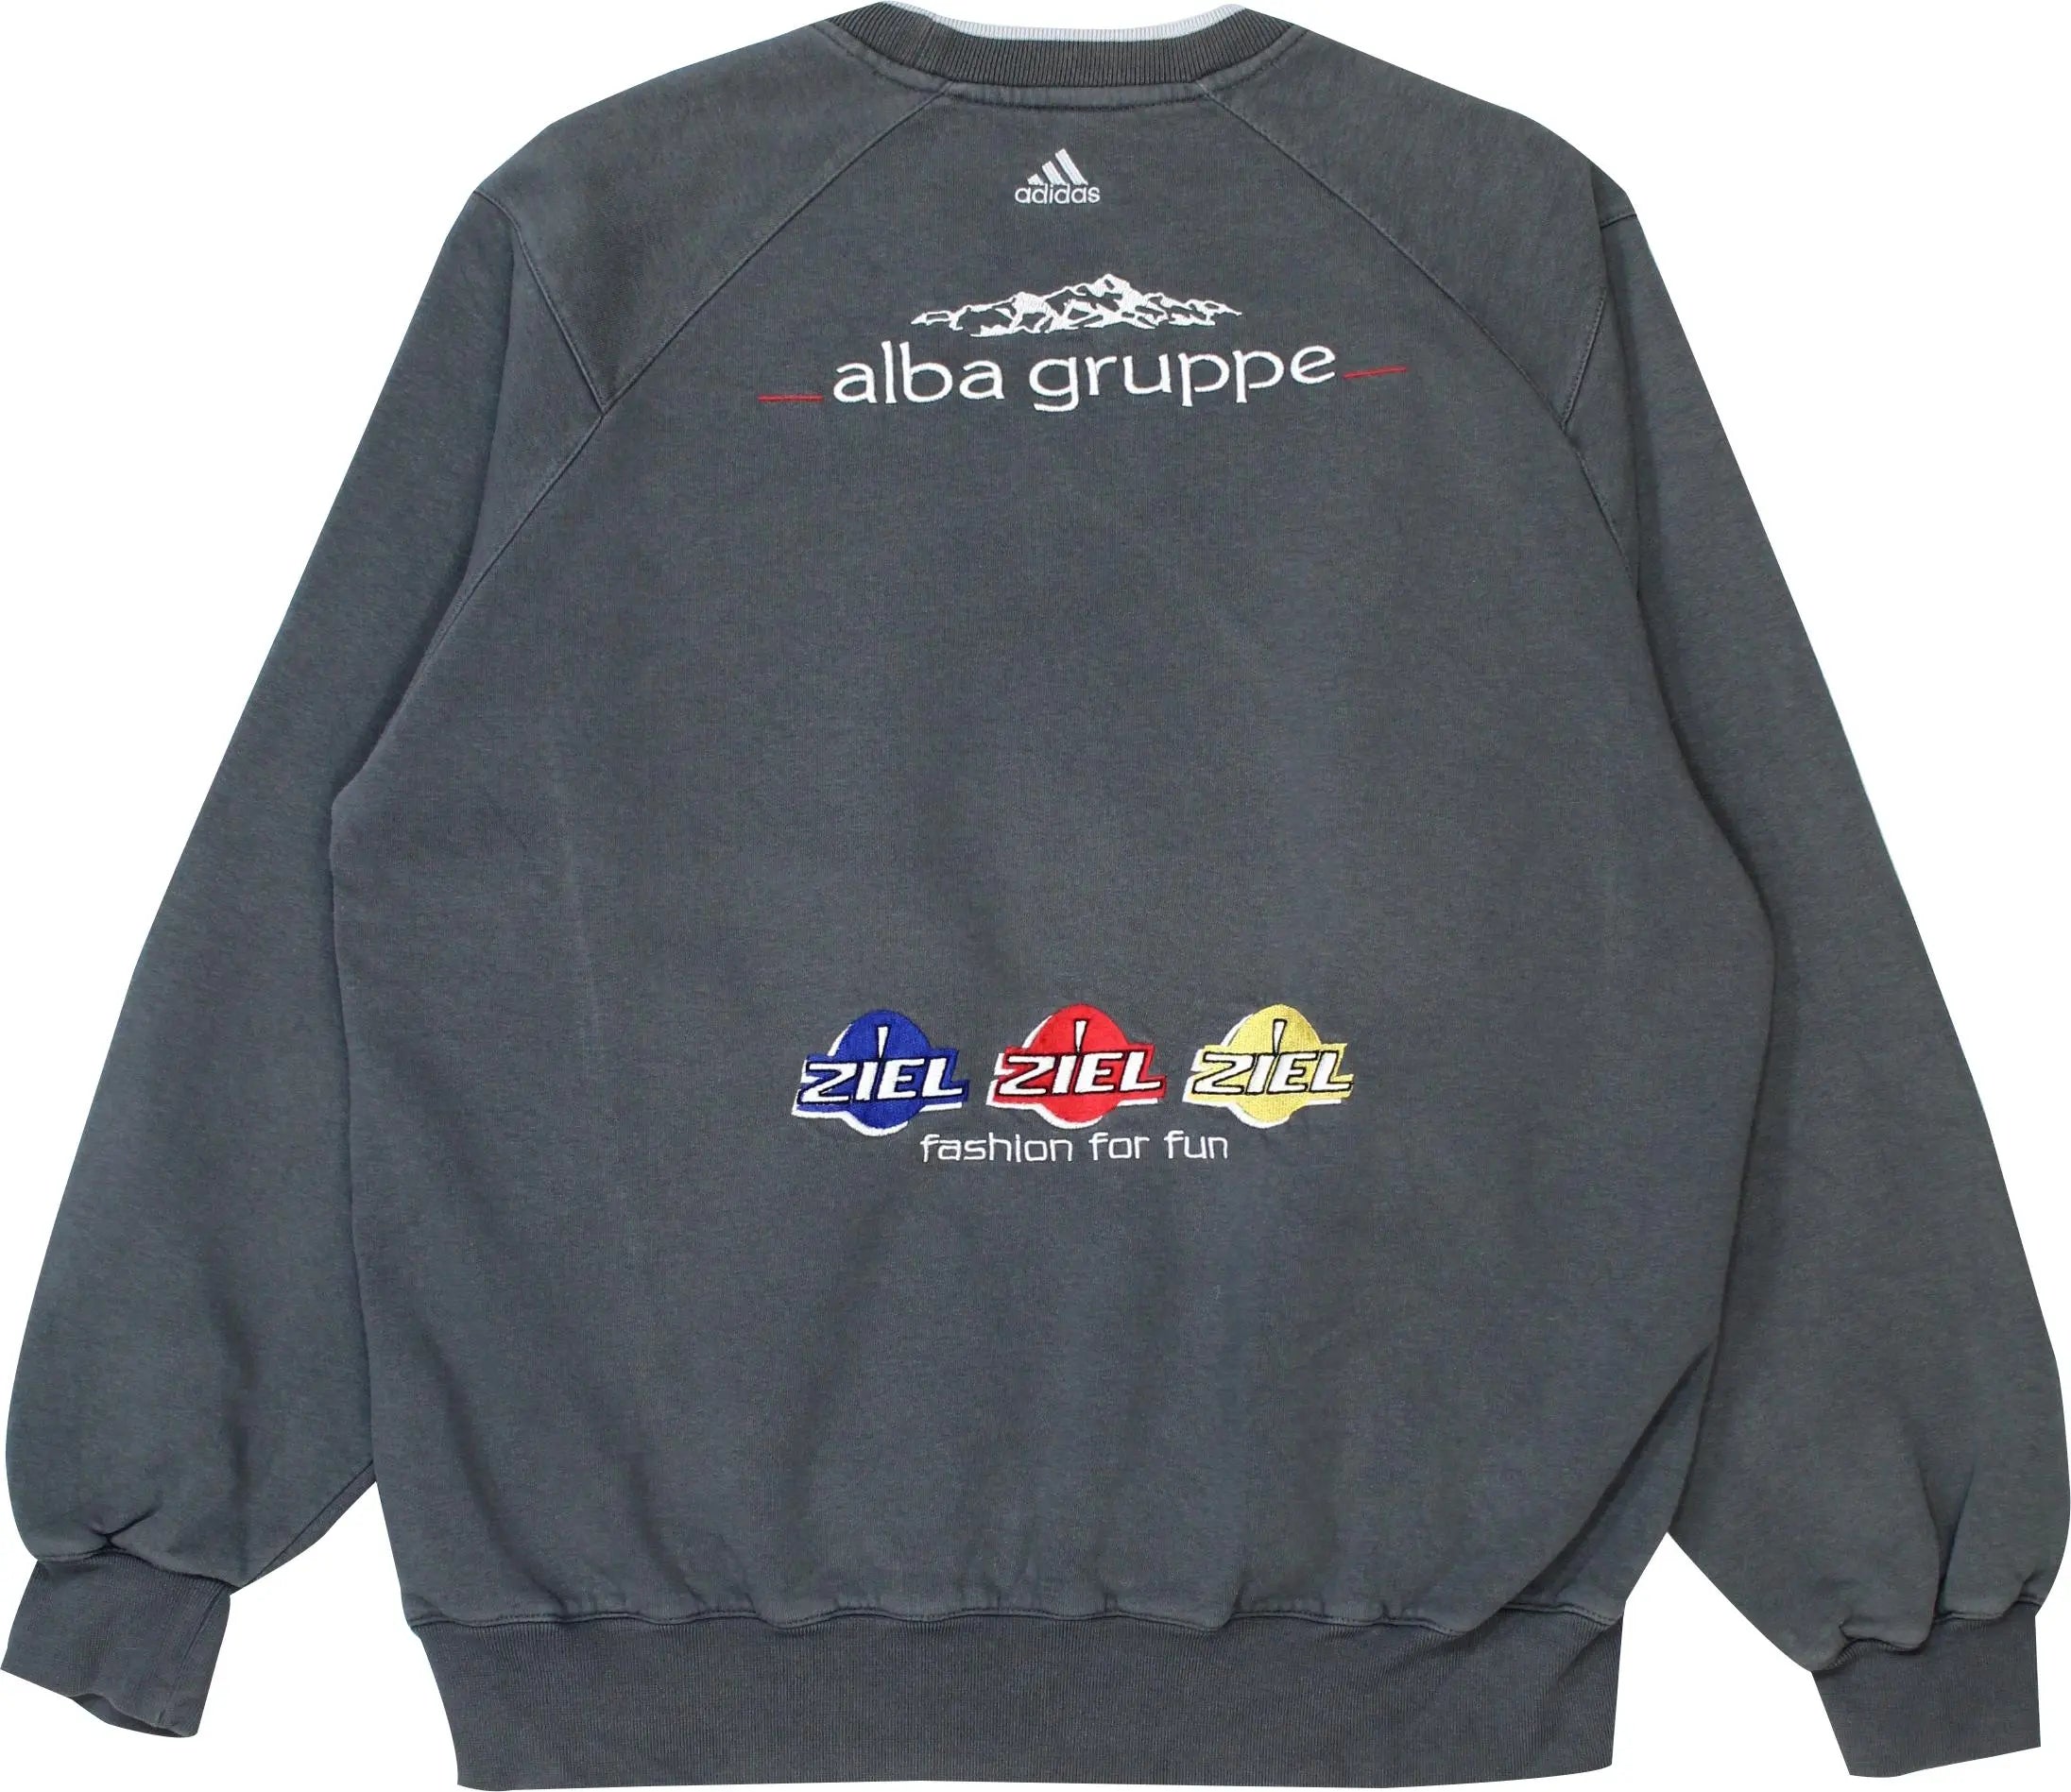 Adidas - 'Alba Gruppe' Crewneck Sweatshirt by Adidas- ThriftTale.com - Vintage and second handclothing